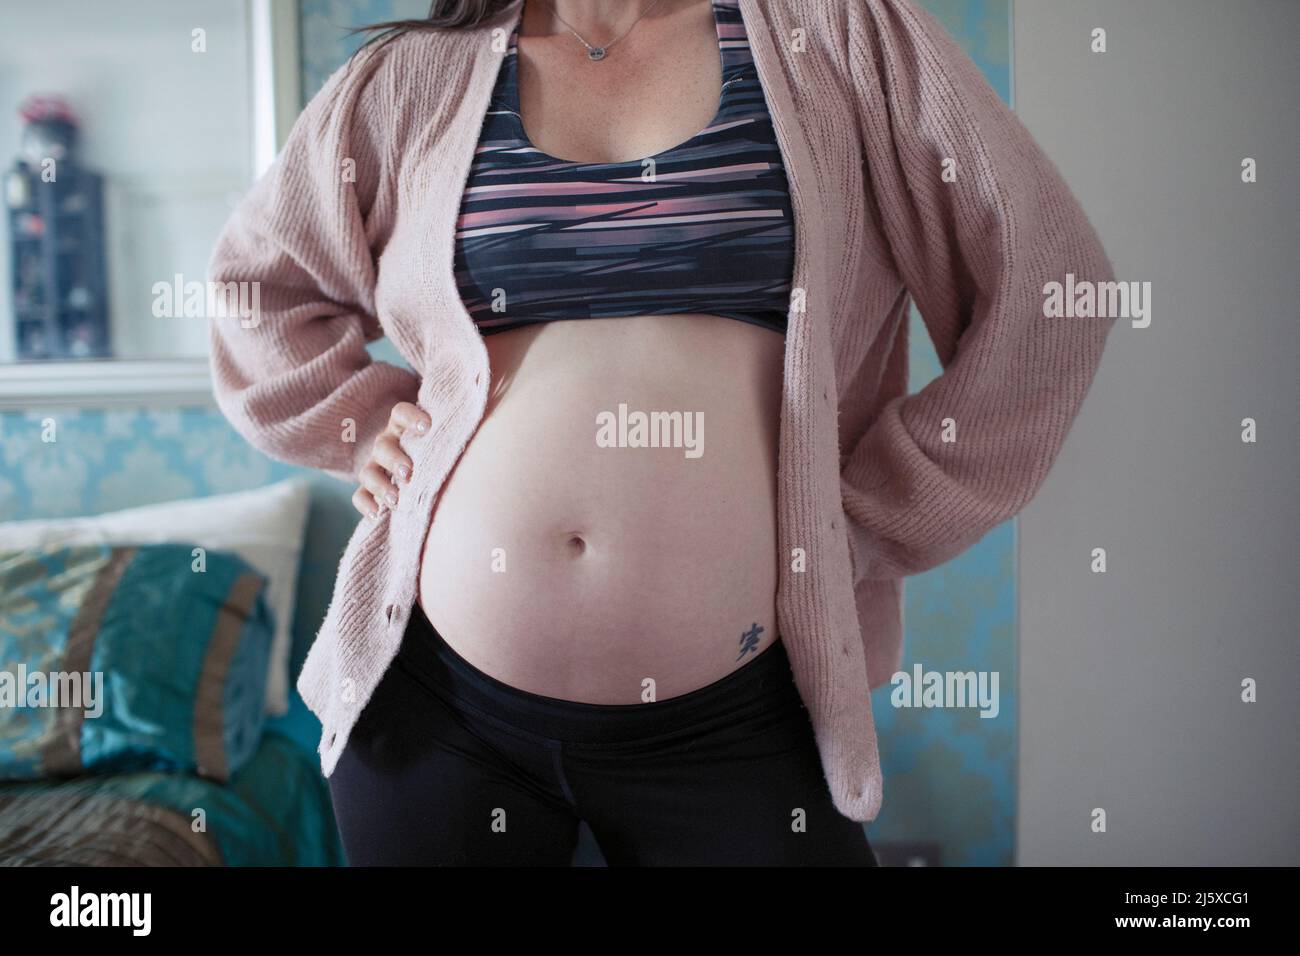 Pregnant woman in sports bra Stock Photo